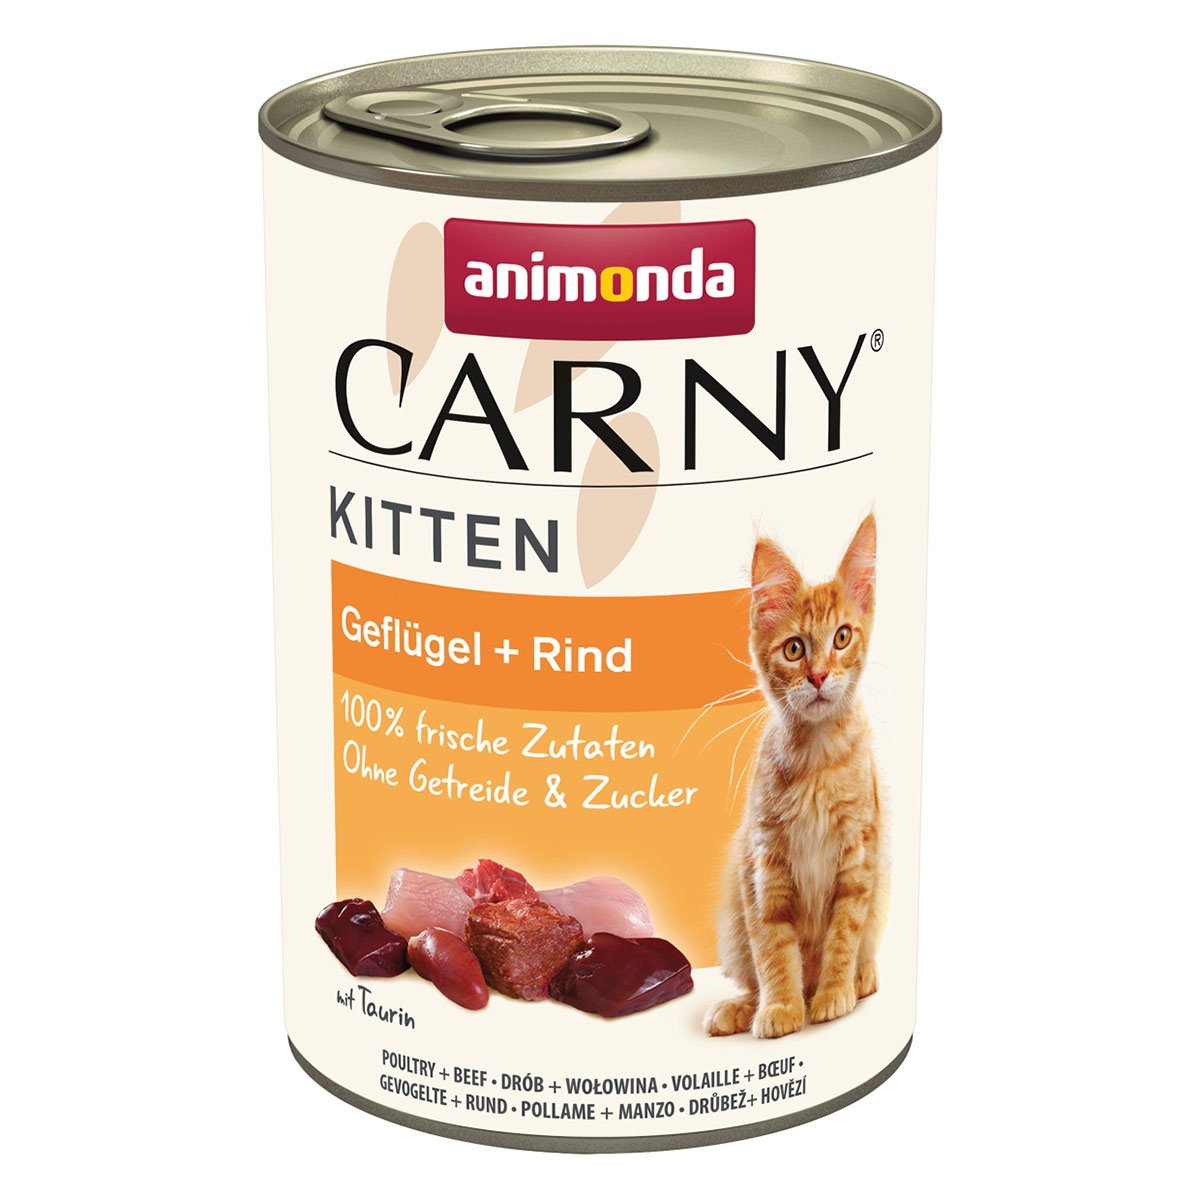 animonda Carny Kitten Gefügel + Rind 24x400g von animonda Carny